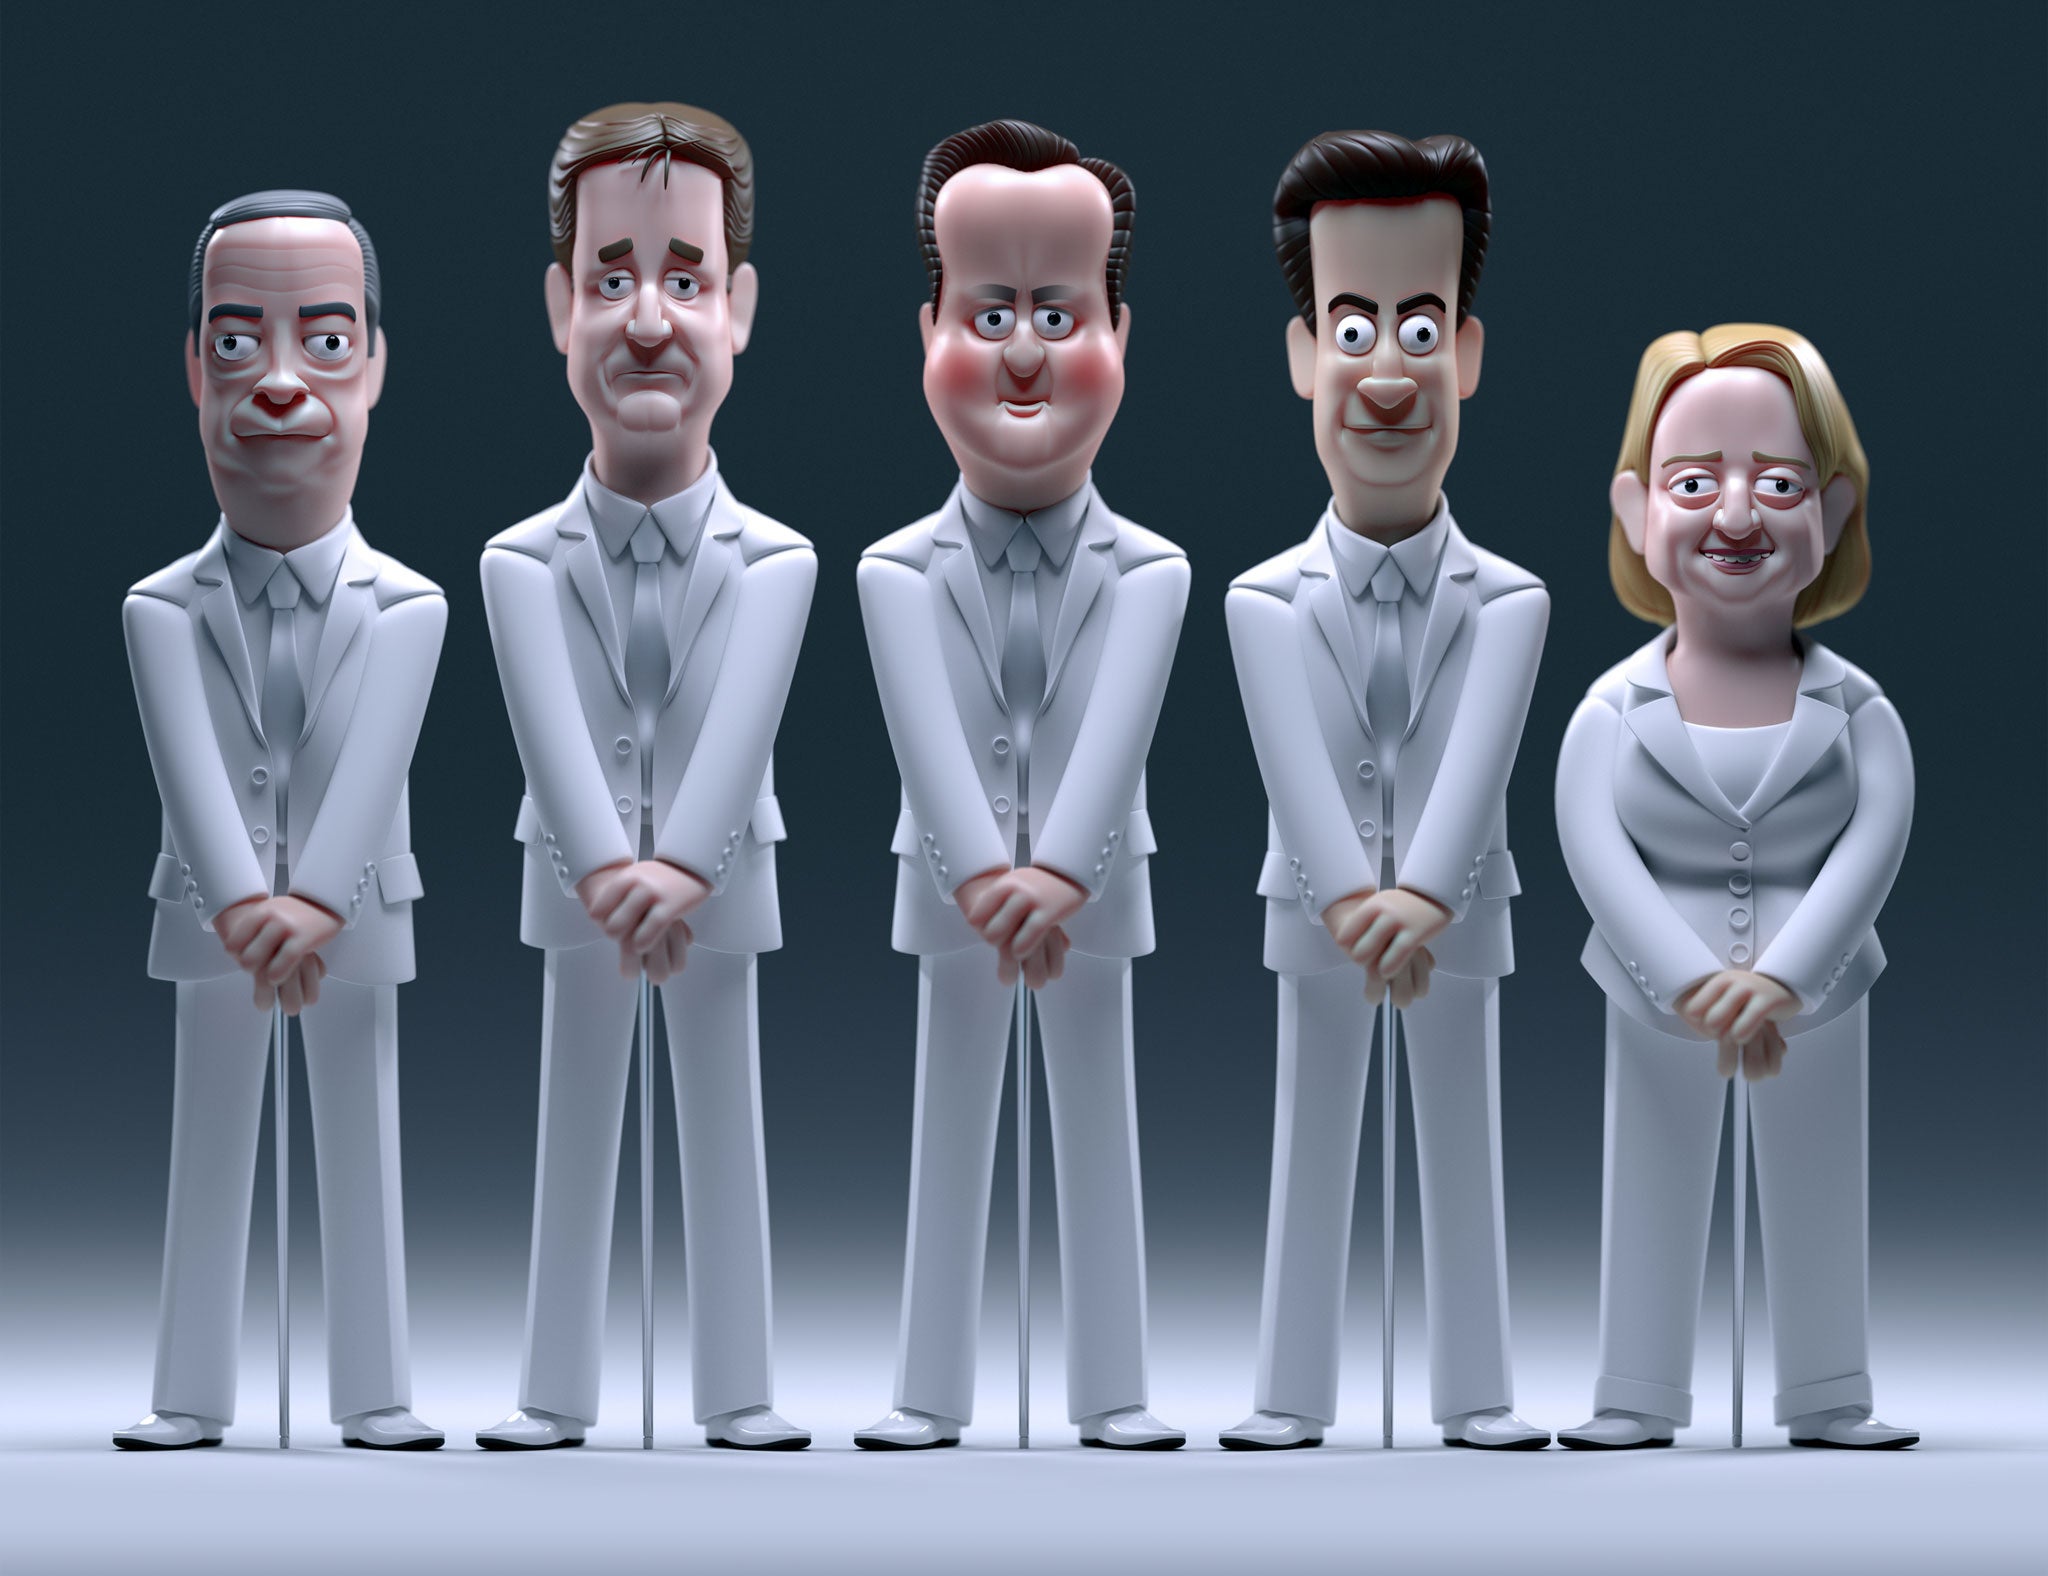 From left: Nigel Farage, Nick Clegg, David Cameron, Ed Miliband and Natalie Bennett